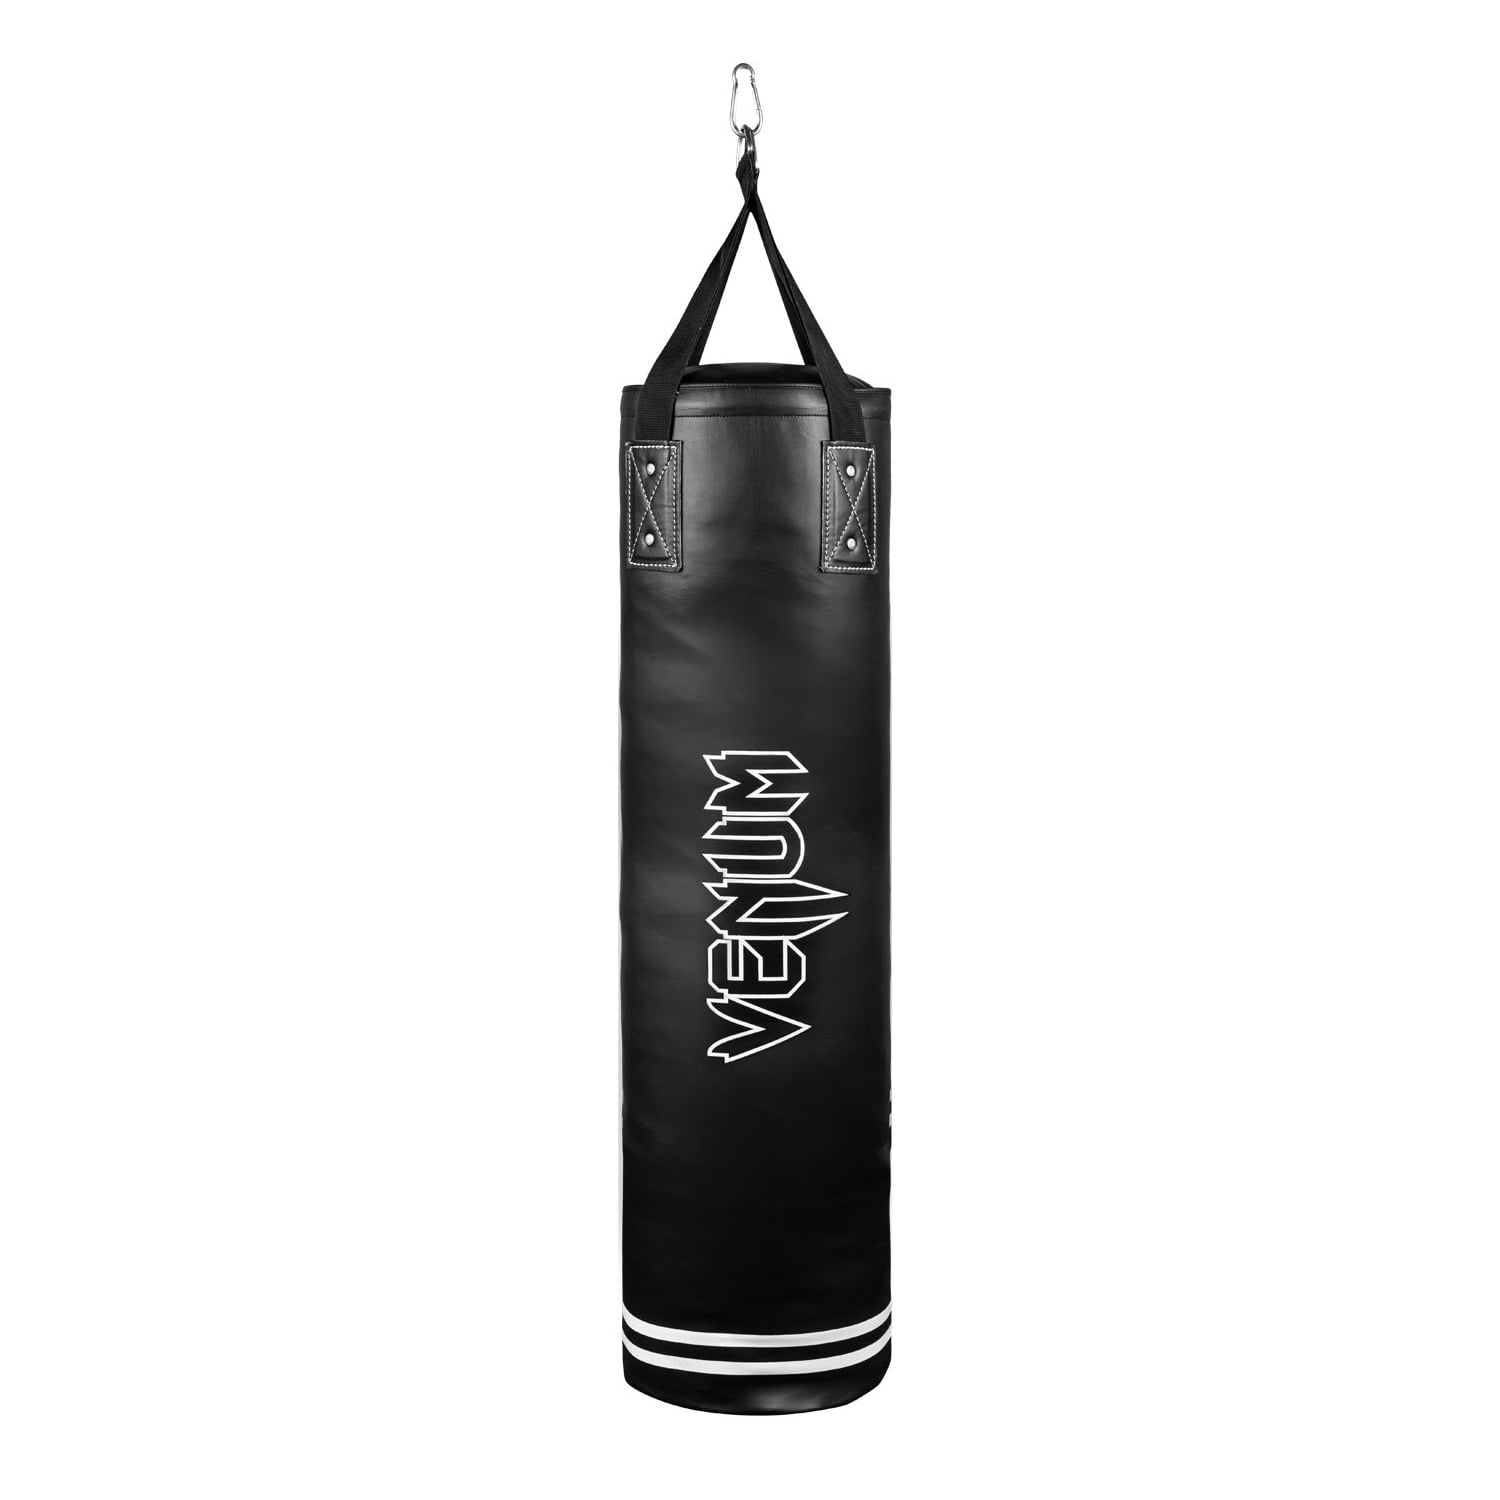 Venum Classic Punching Bag - 70 lb - Black/White - Heavy Bag Kit